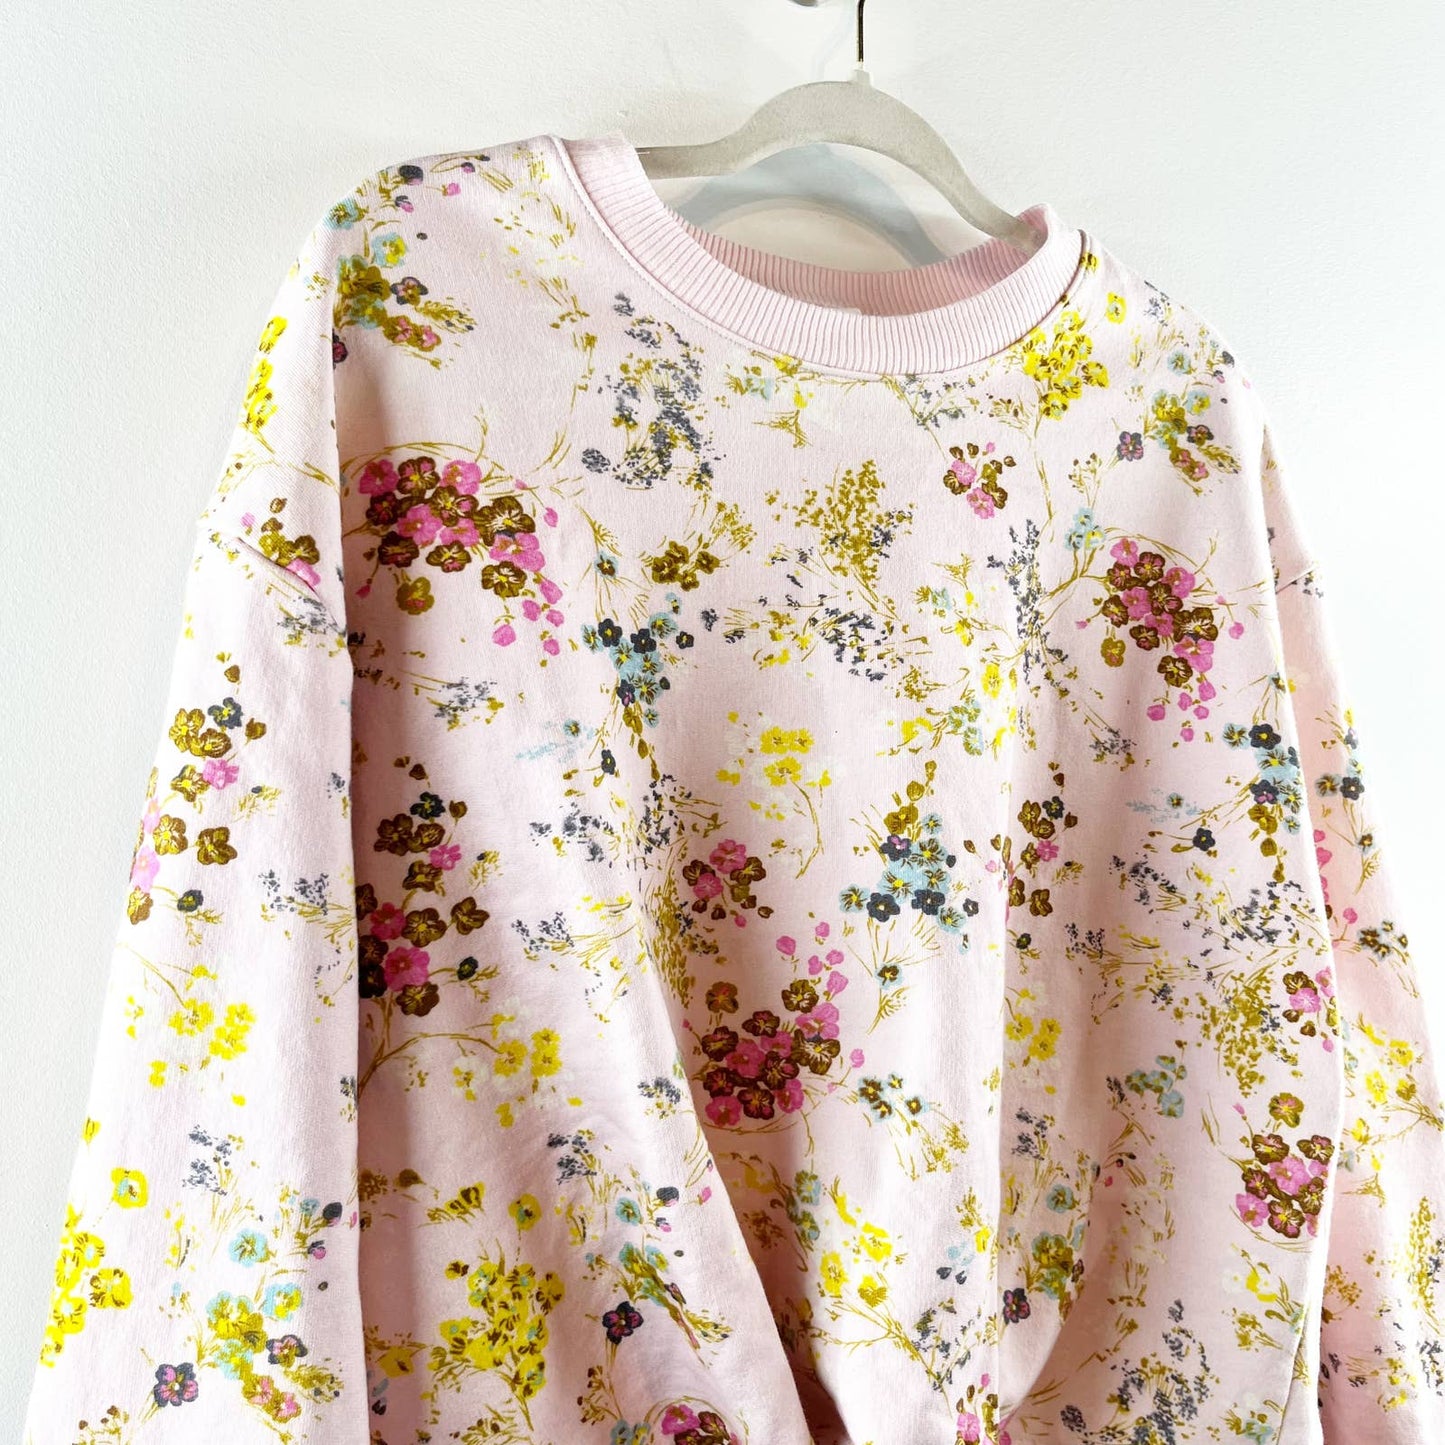 Cinq a Sept Parker Sakura Floral Tie-Front Pullover Sweatshirt Pink Large